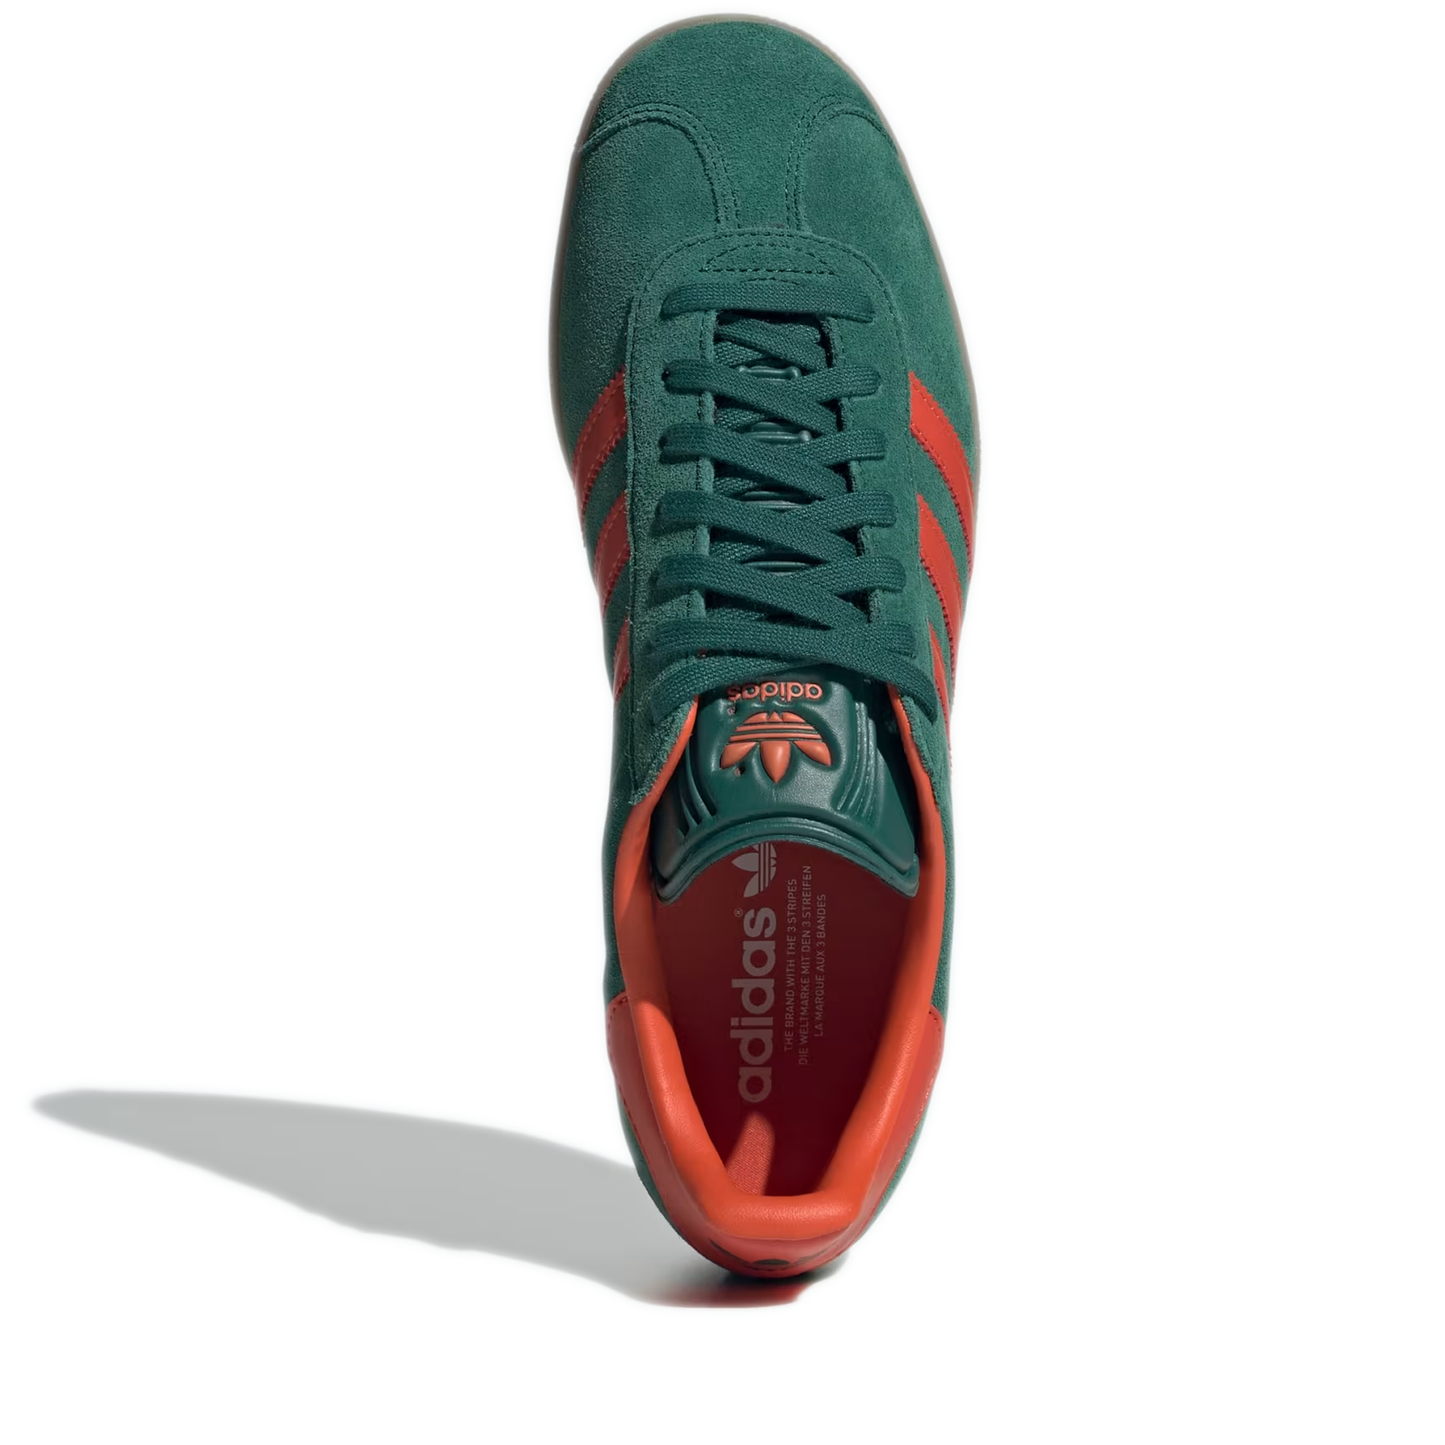 Men's Adidas Gazelle Shoes - Collegiate Green/ Preloved Red/ Gum